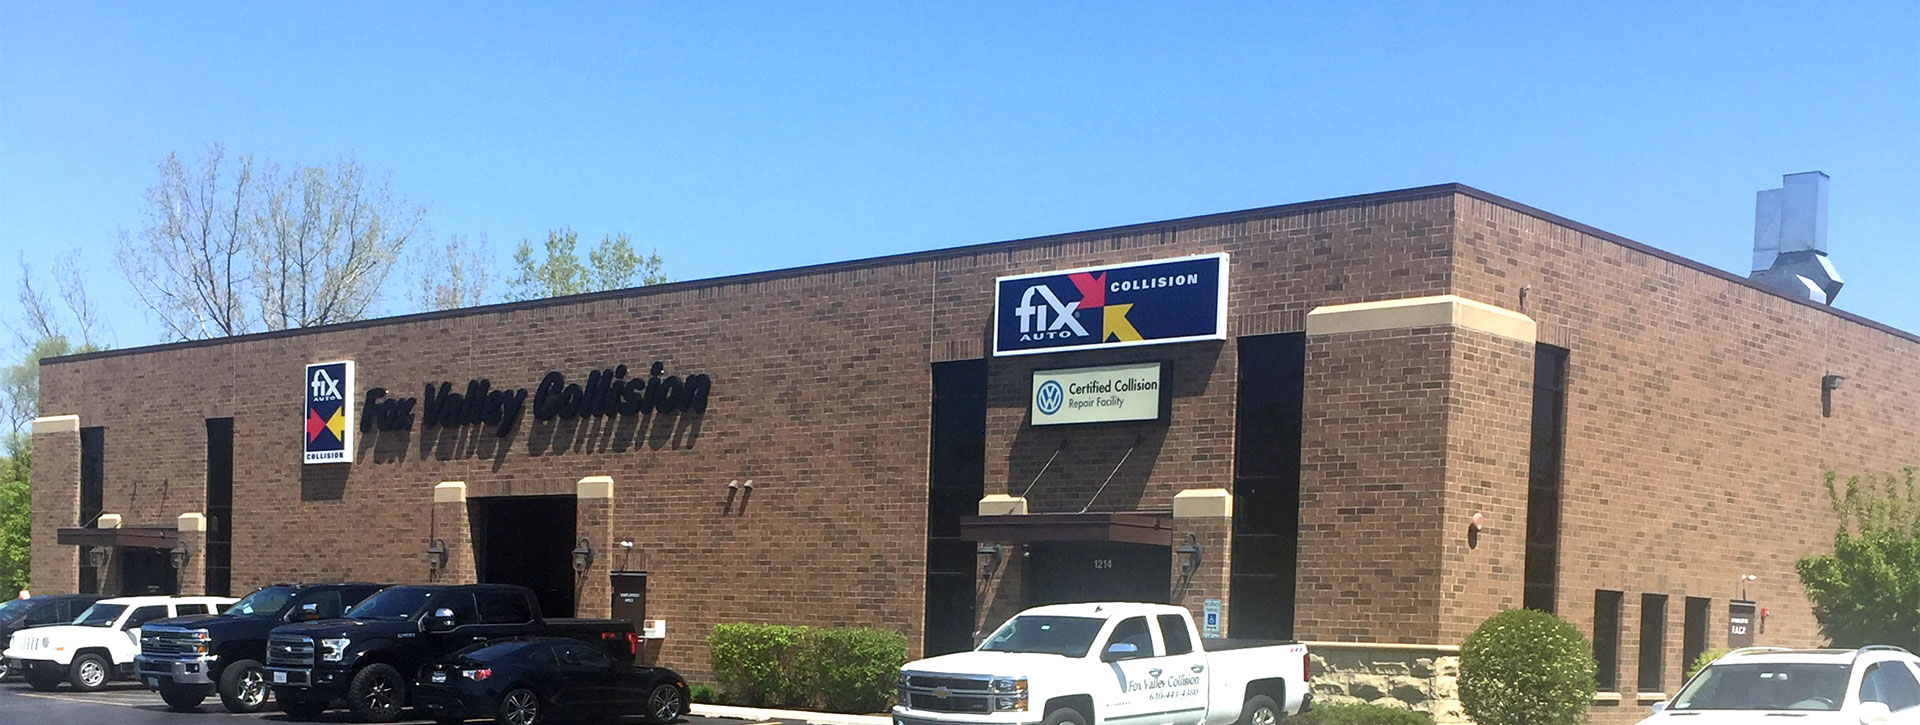 Fix Auto Fox Valley Auto Body Shop Sign and Building Exterior